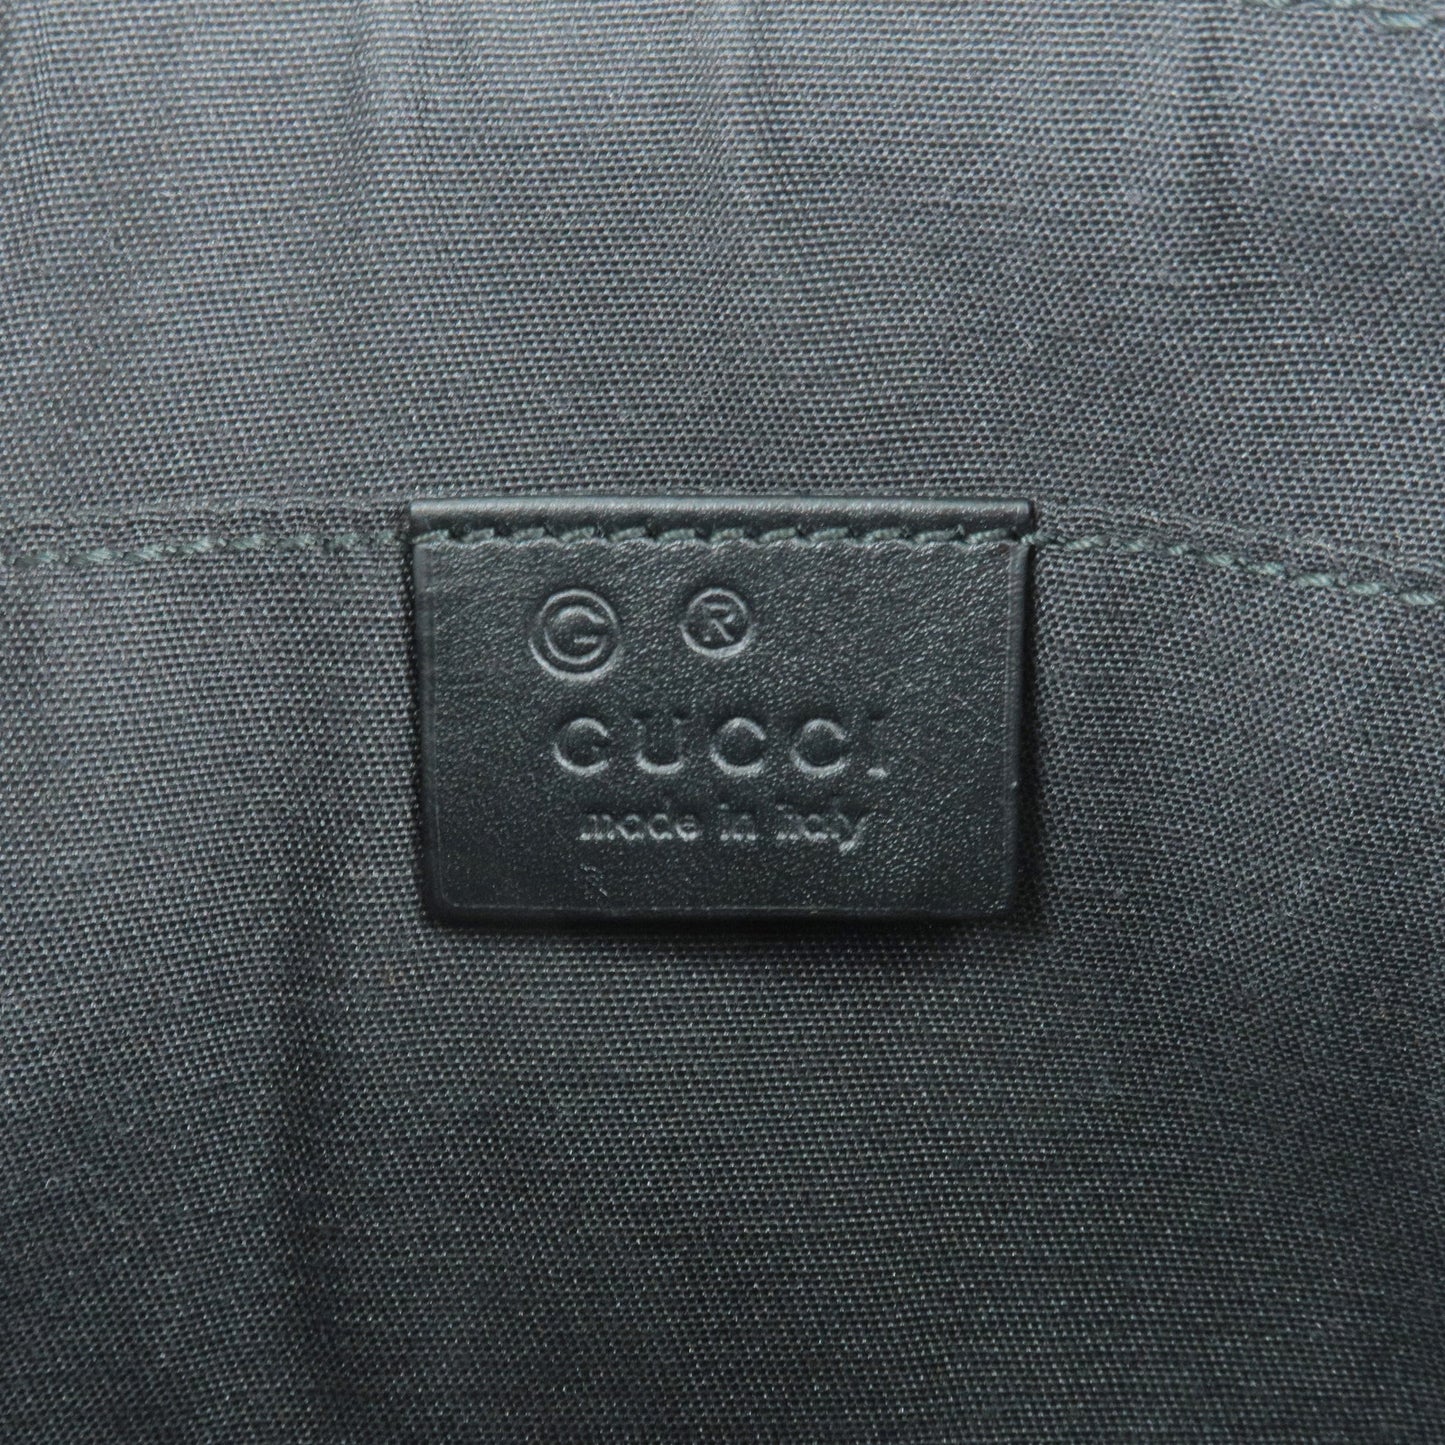 GUCCI GG Nylon Leather Pouch Hand Bag Purse Black 272381